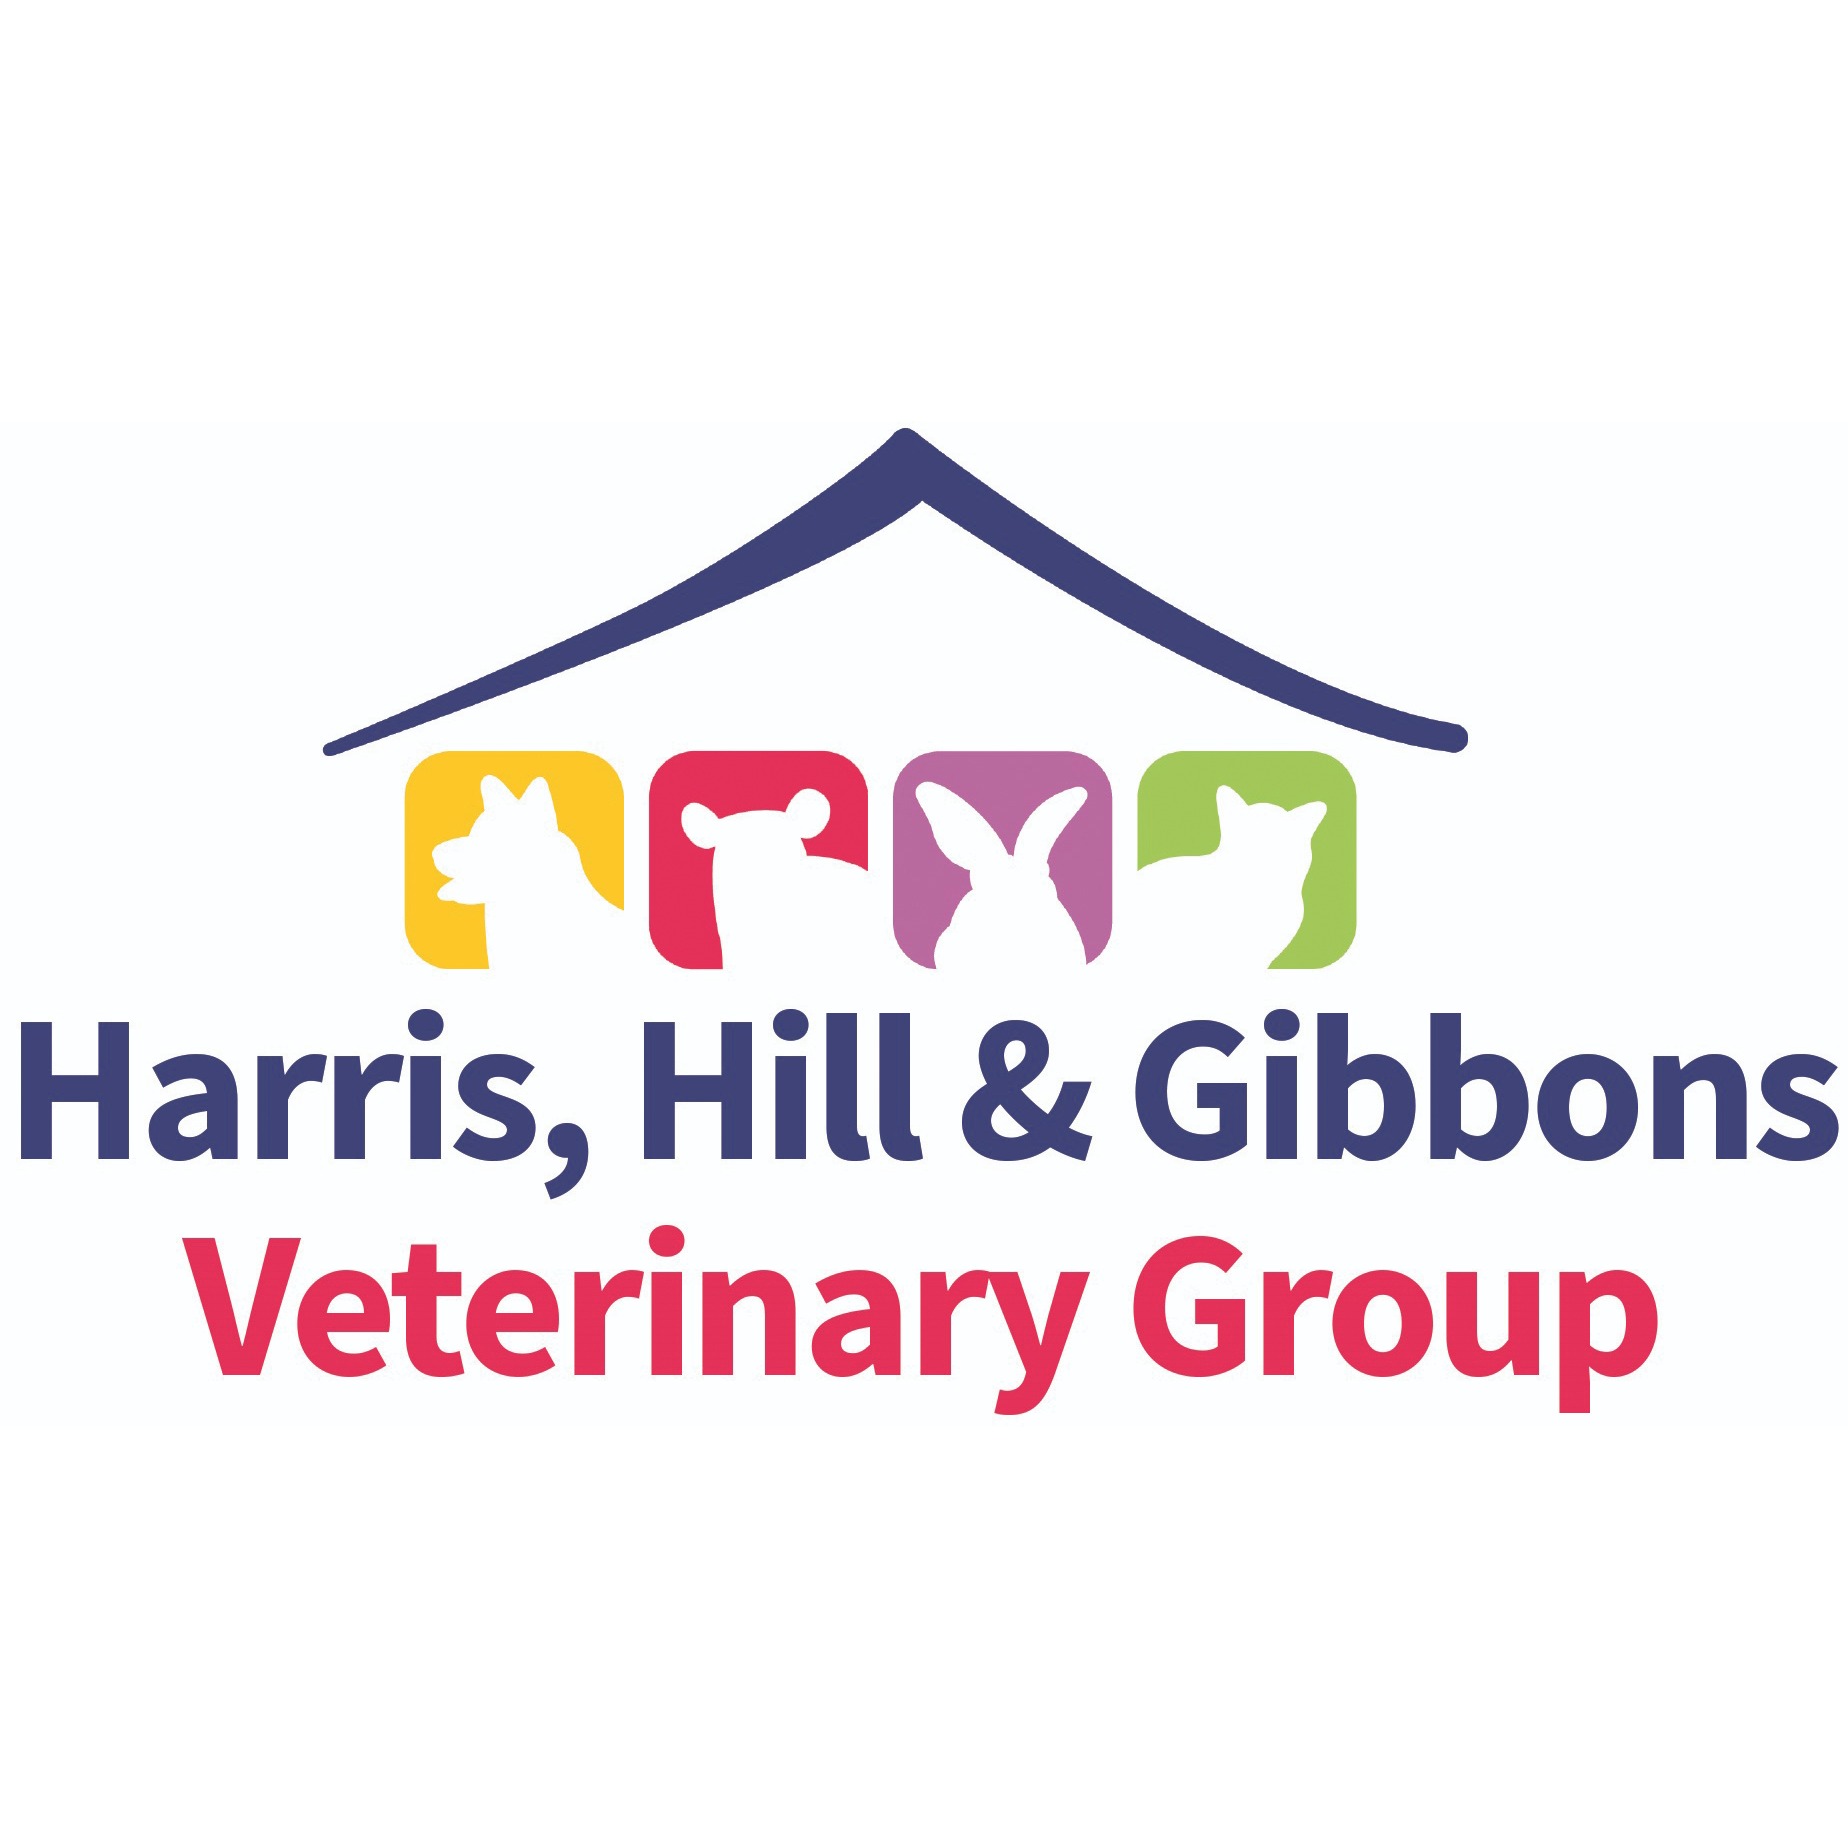 Harris, Hill & Gibbons Veterinary Group - Warminister Logo